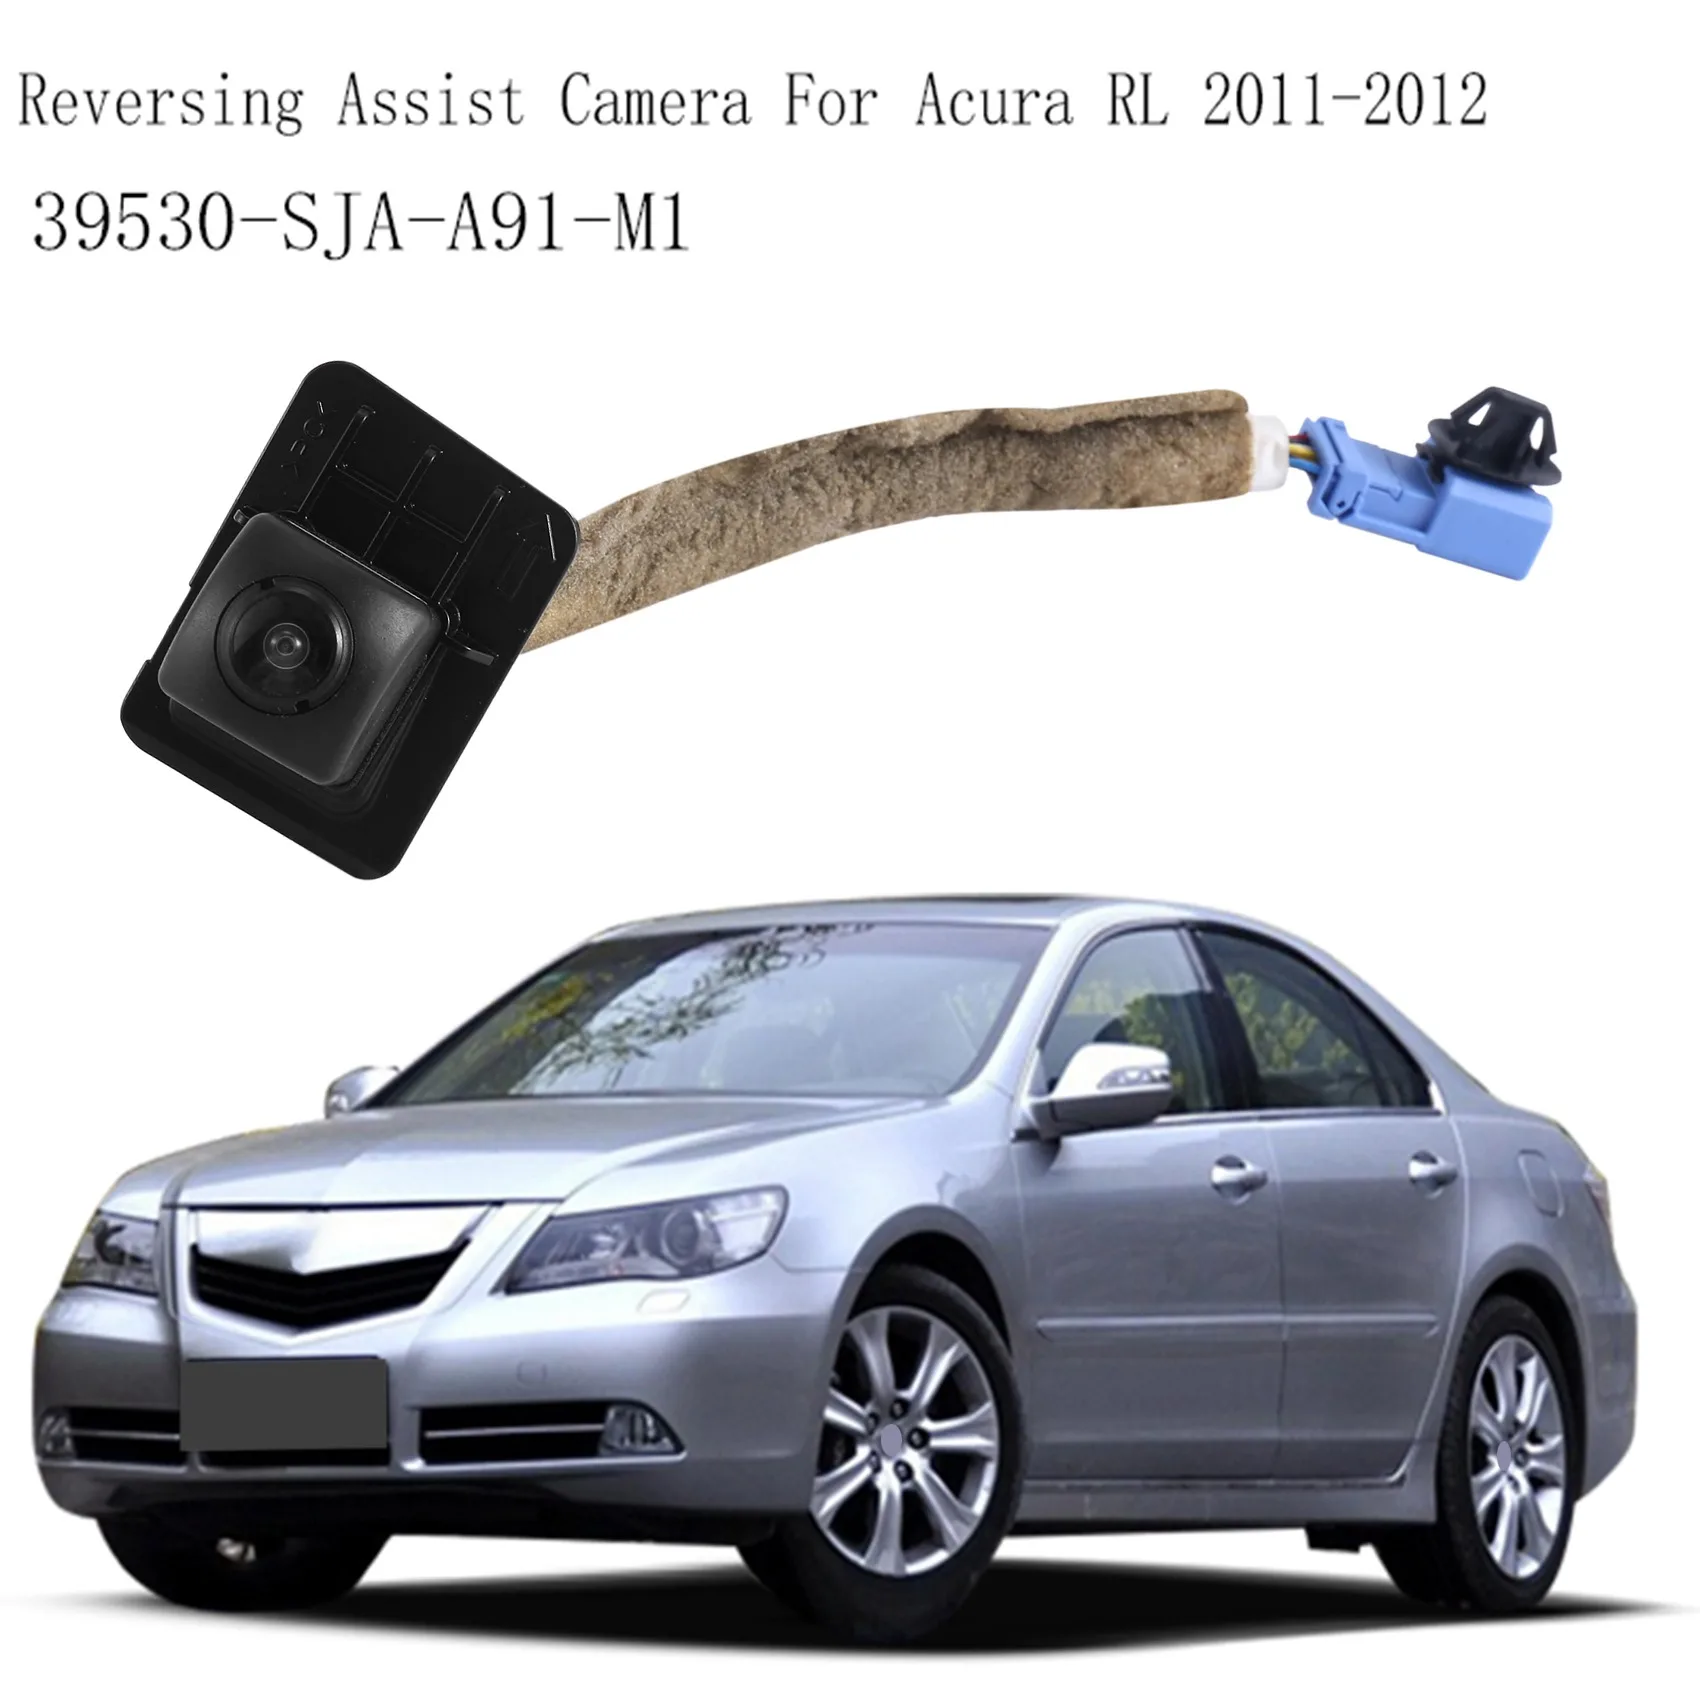 

39530-SJA-A91-M1 Rear View Camera Backup Camera Reversing Assist Camera for Honda Acura RL 2011-2012